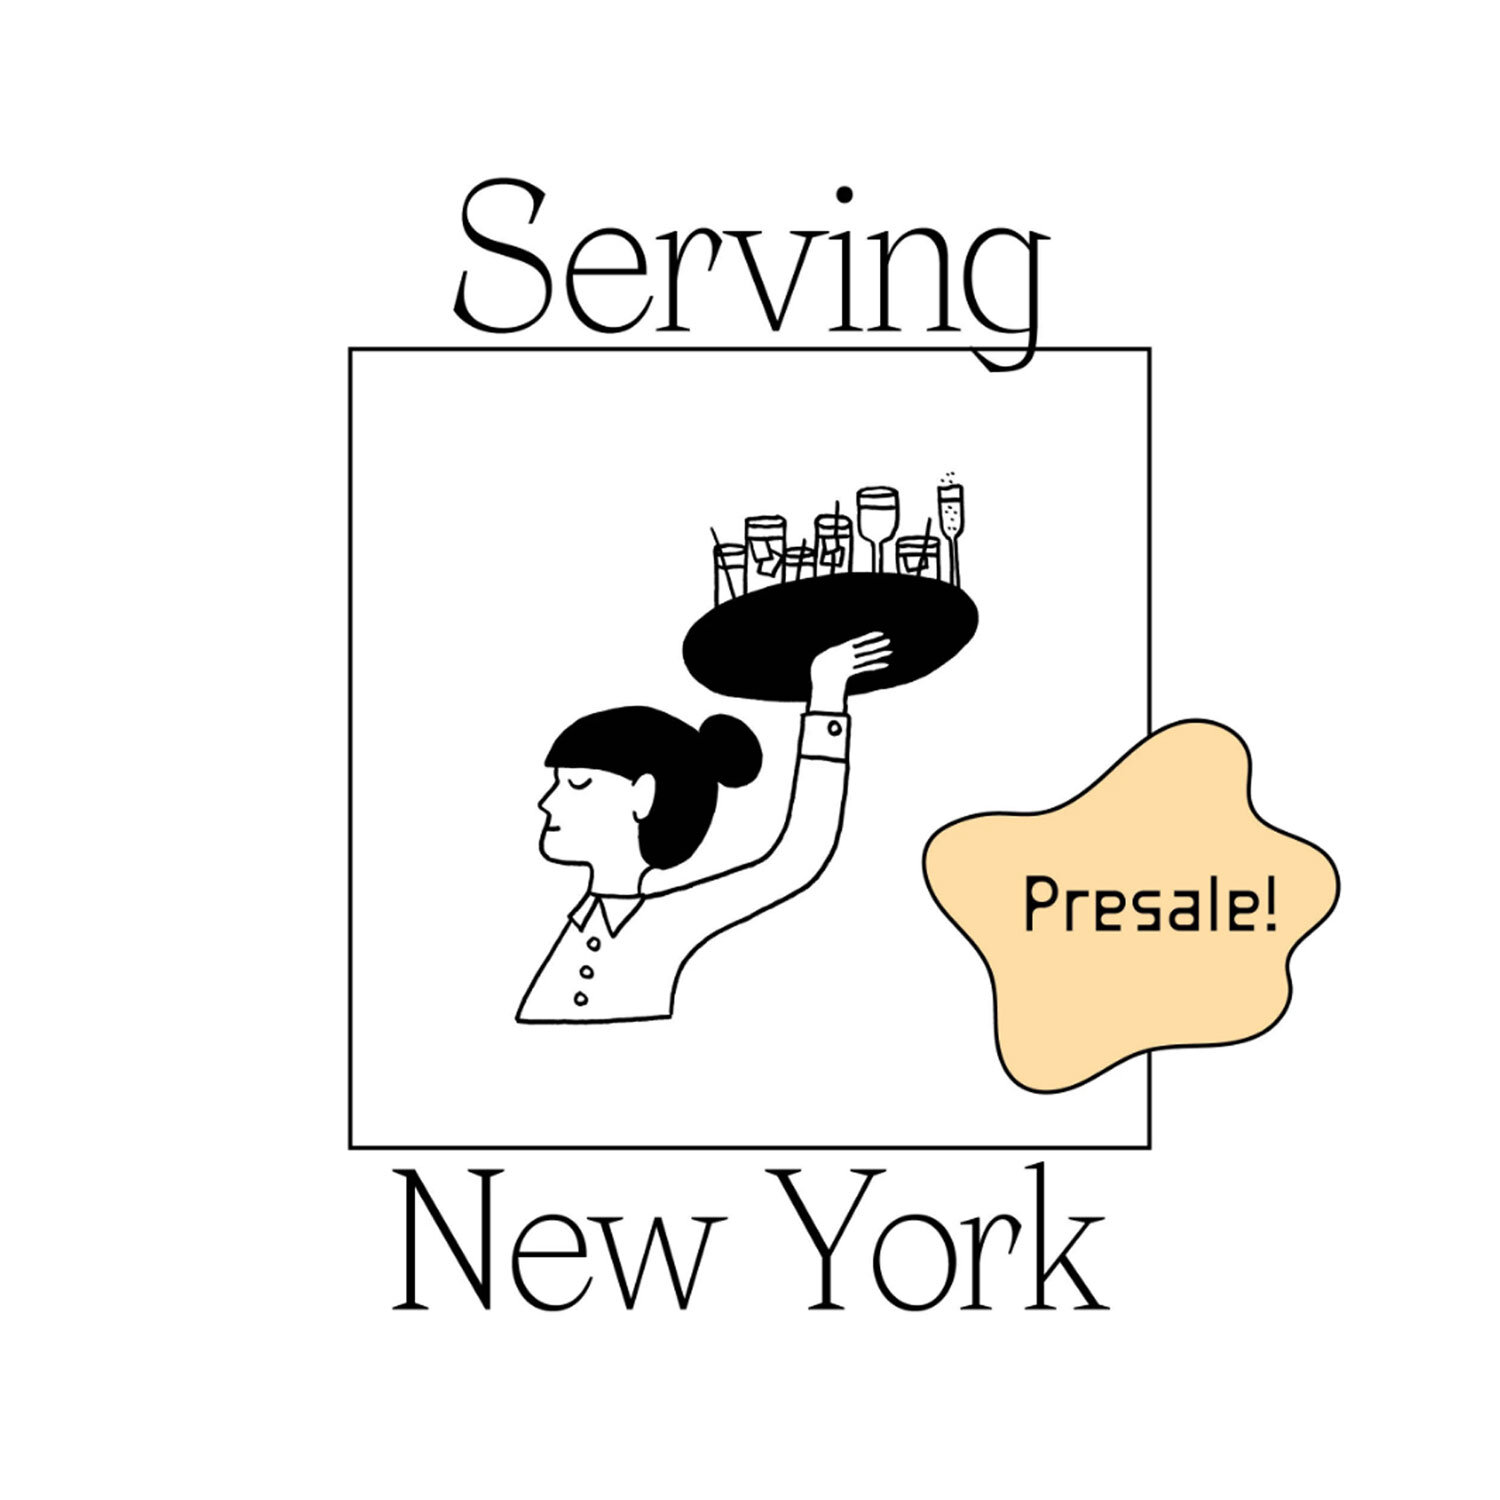 Serving New York by Kristin Tice Studeman